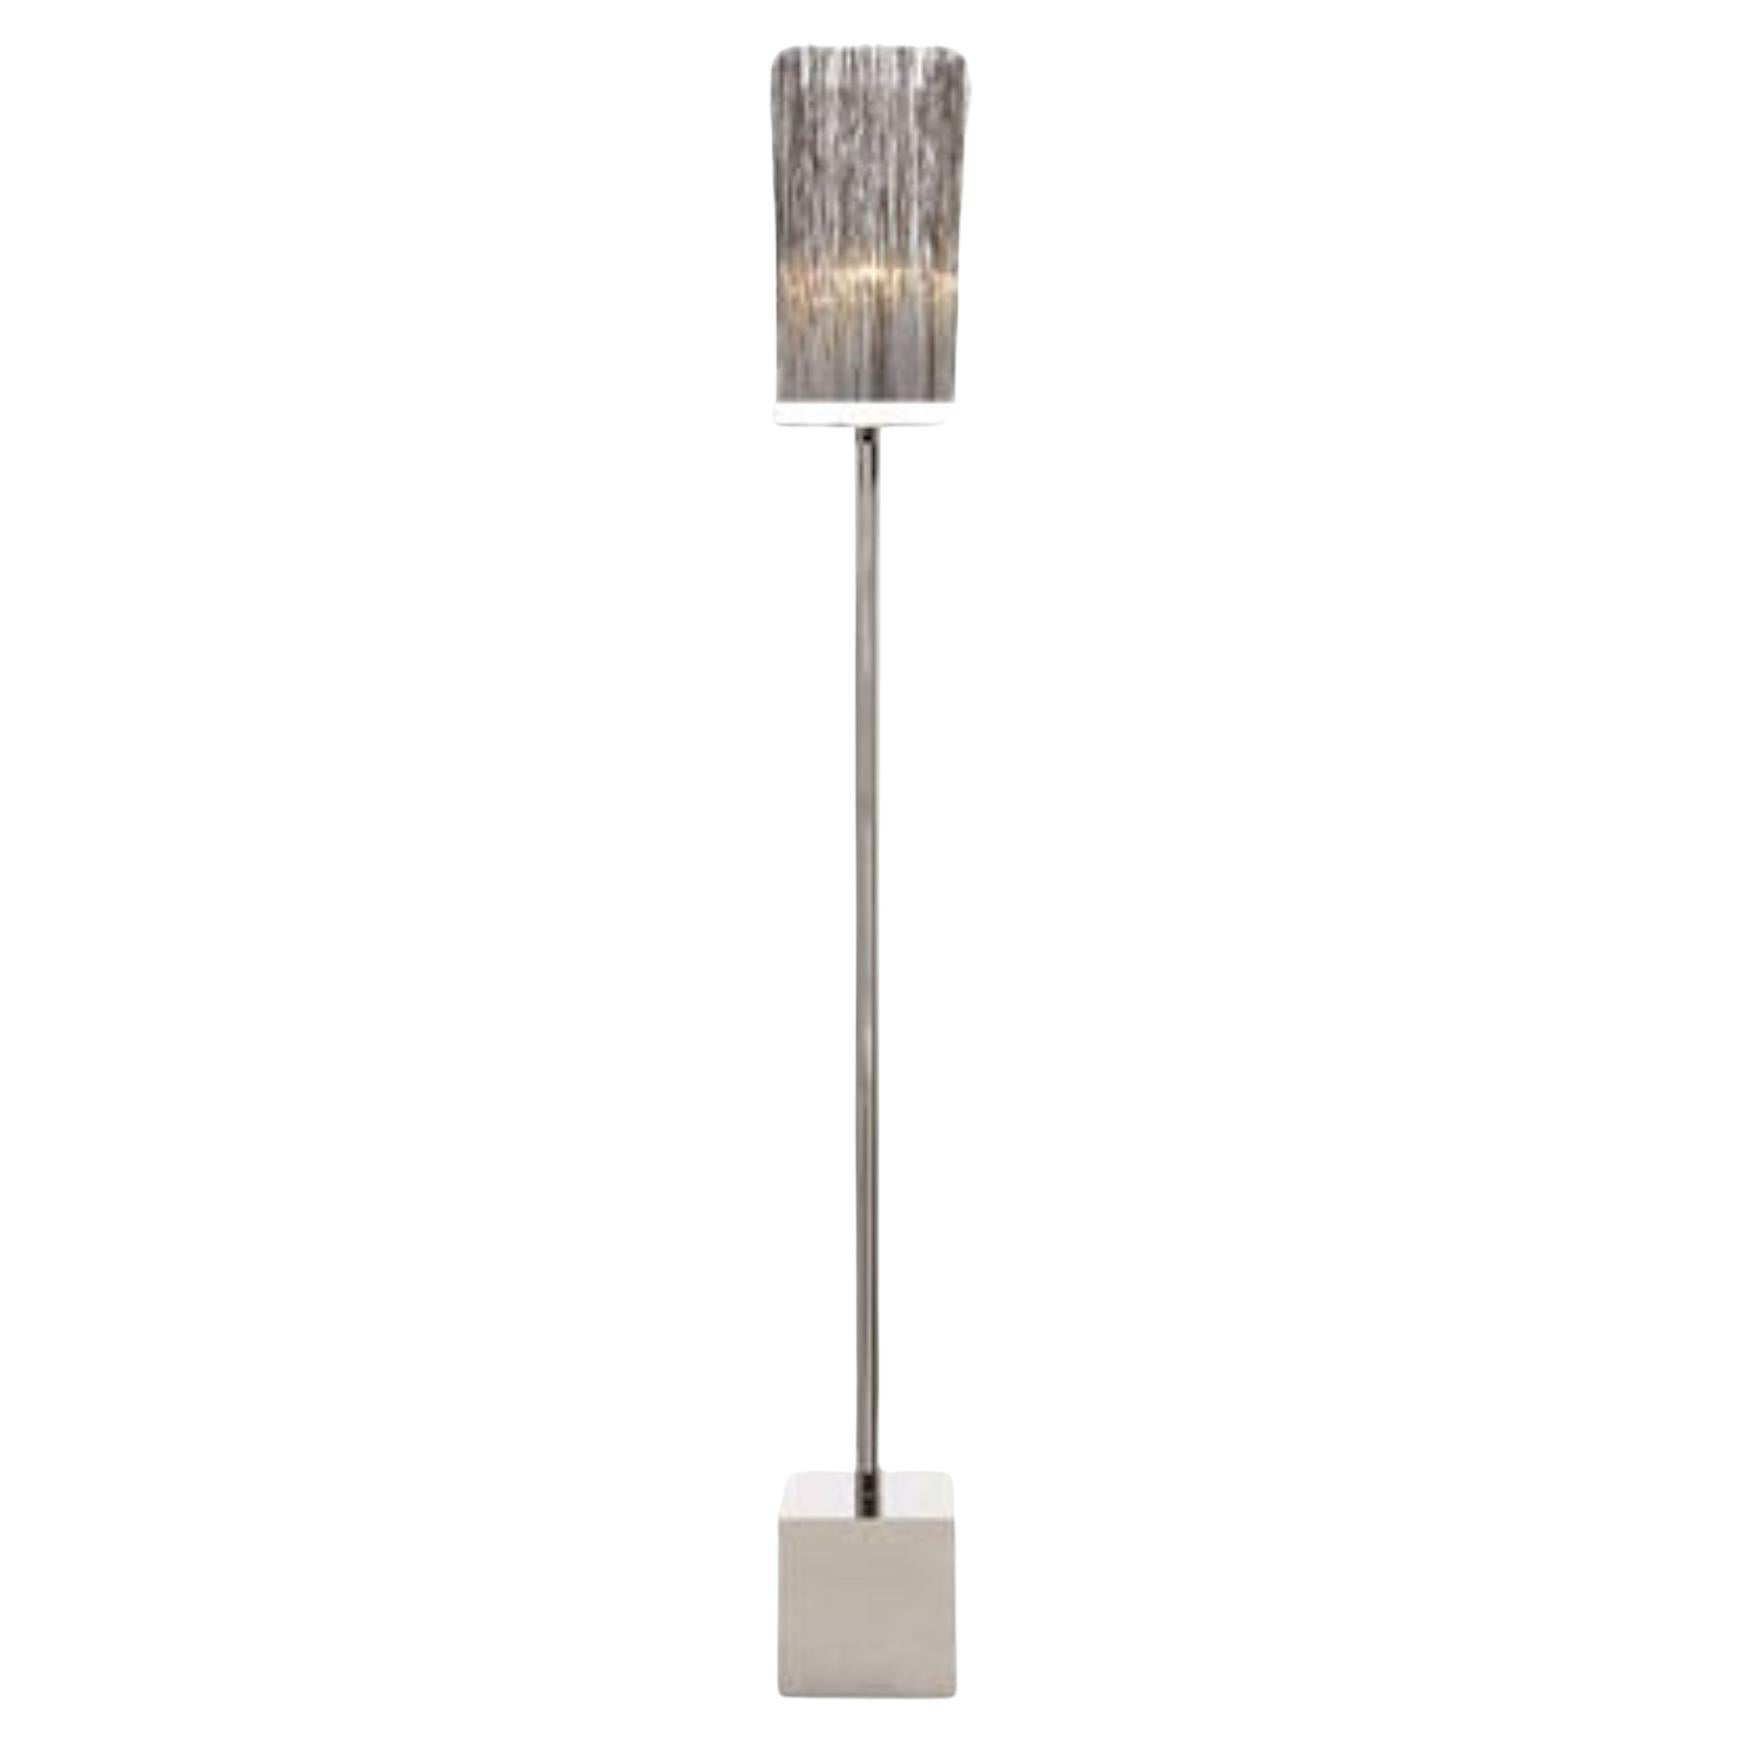 Tall Contemporary Modern Brand Van Egmond Floor Lamp